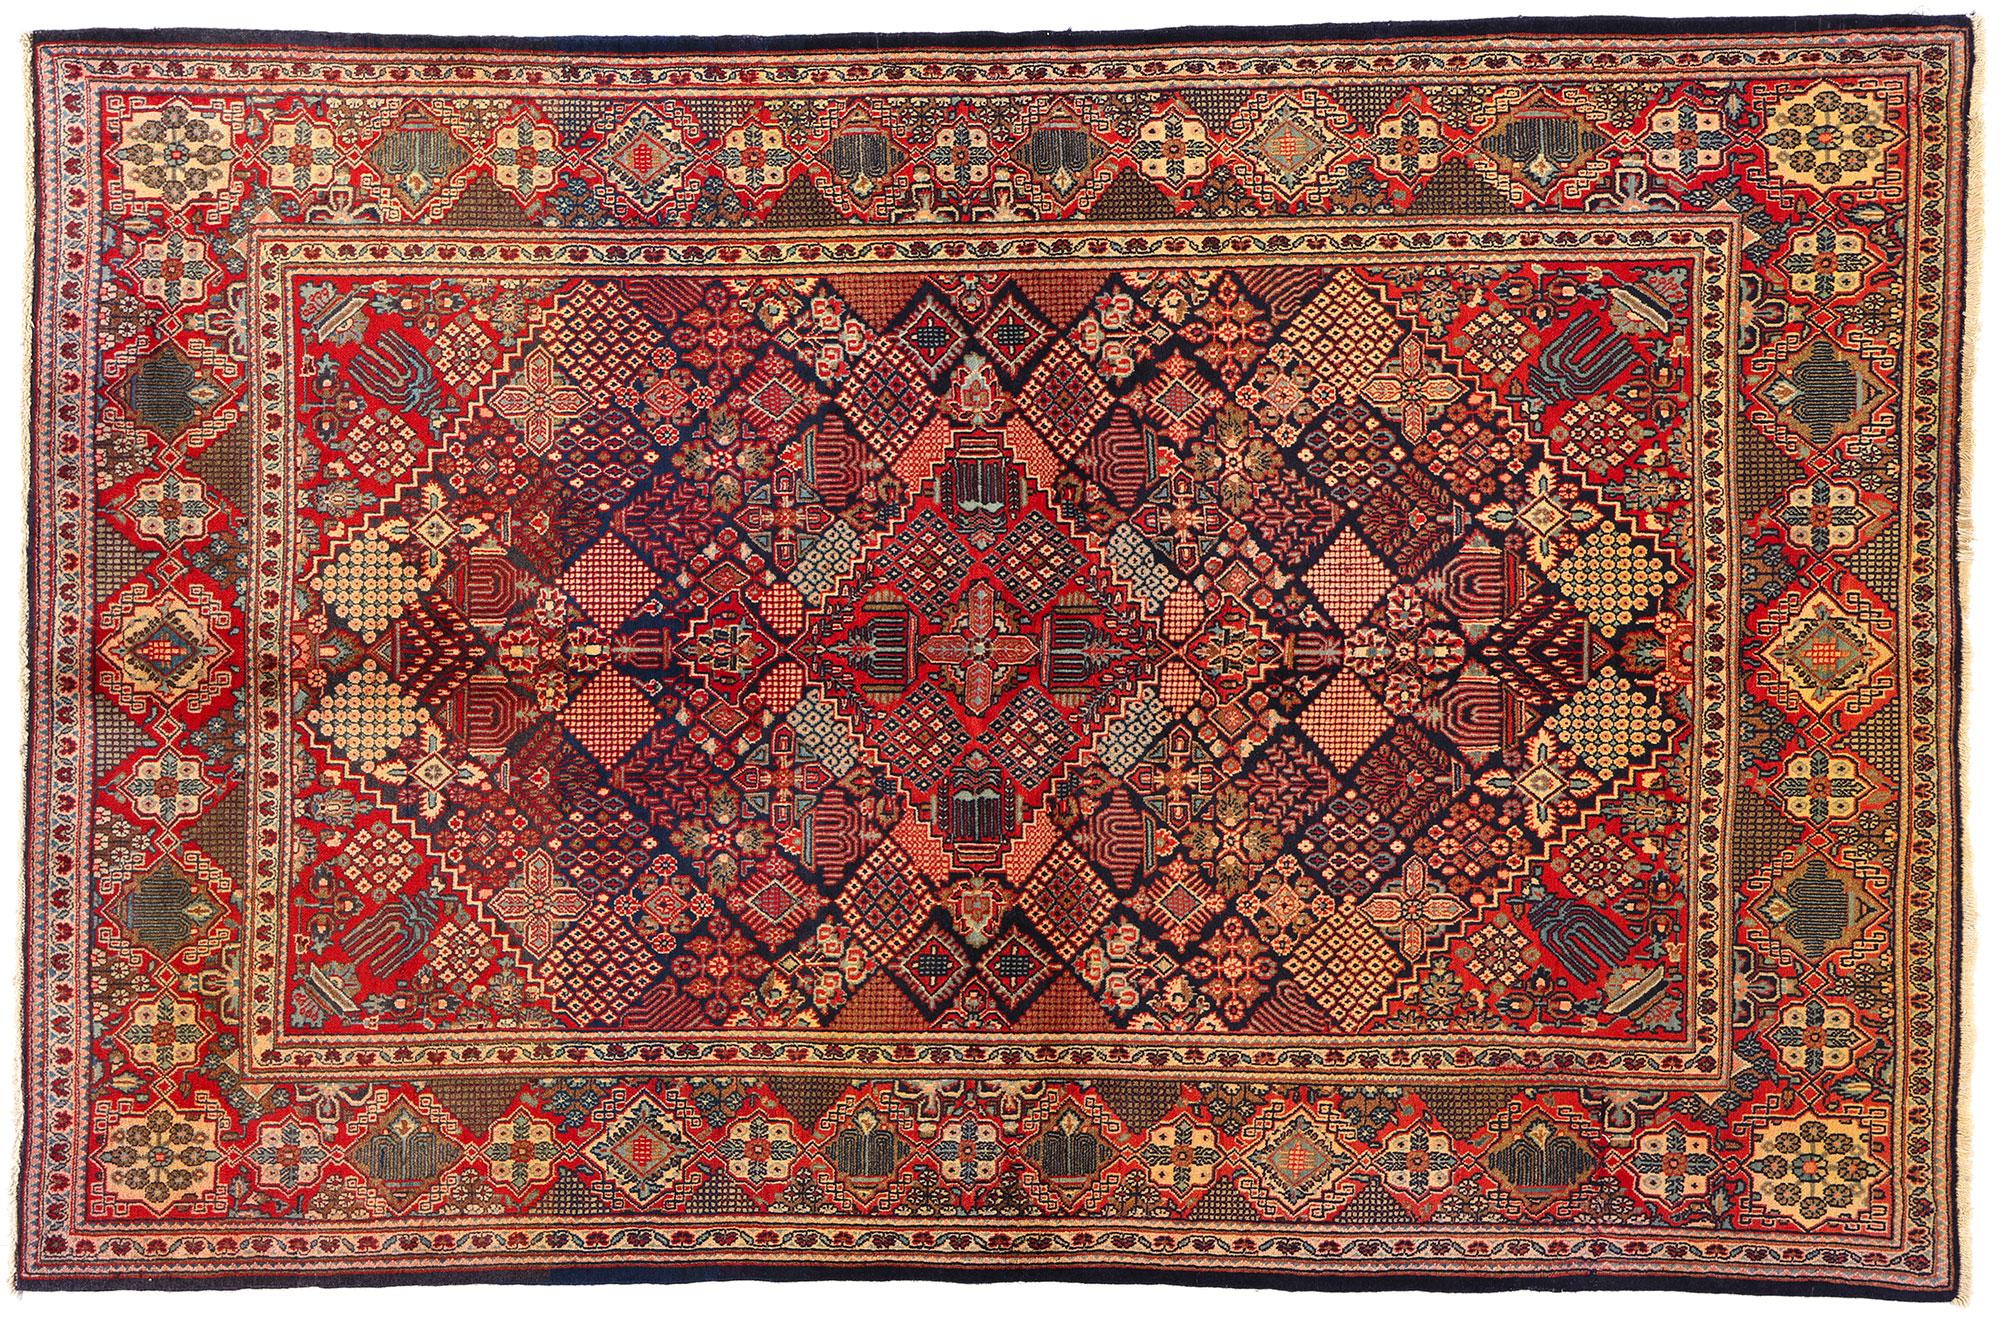 Antique Persian Kashan Rug with Joshegan Diamond Design and Jewel-Tone Colors For Sale 3